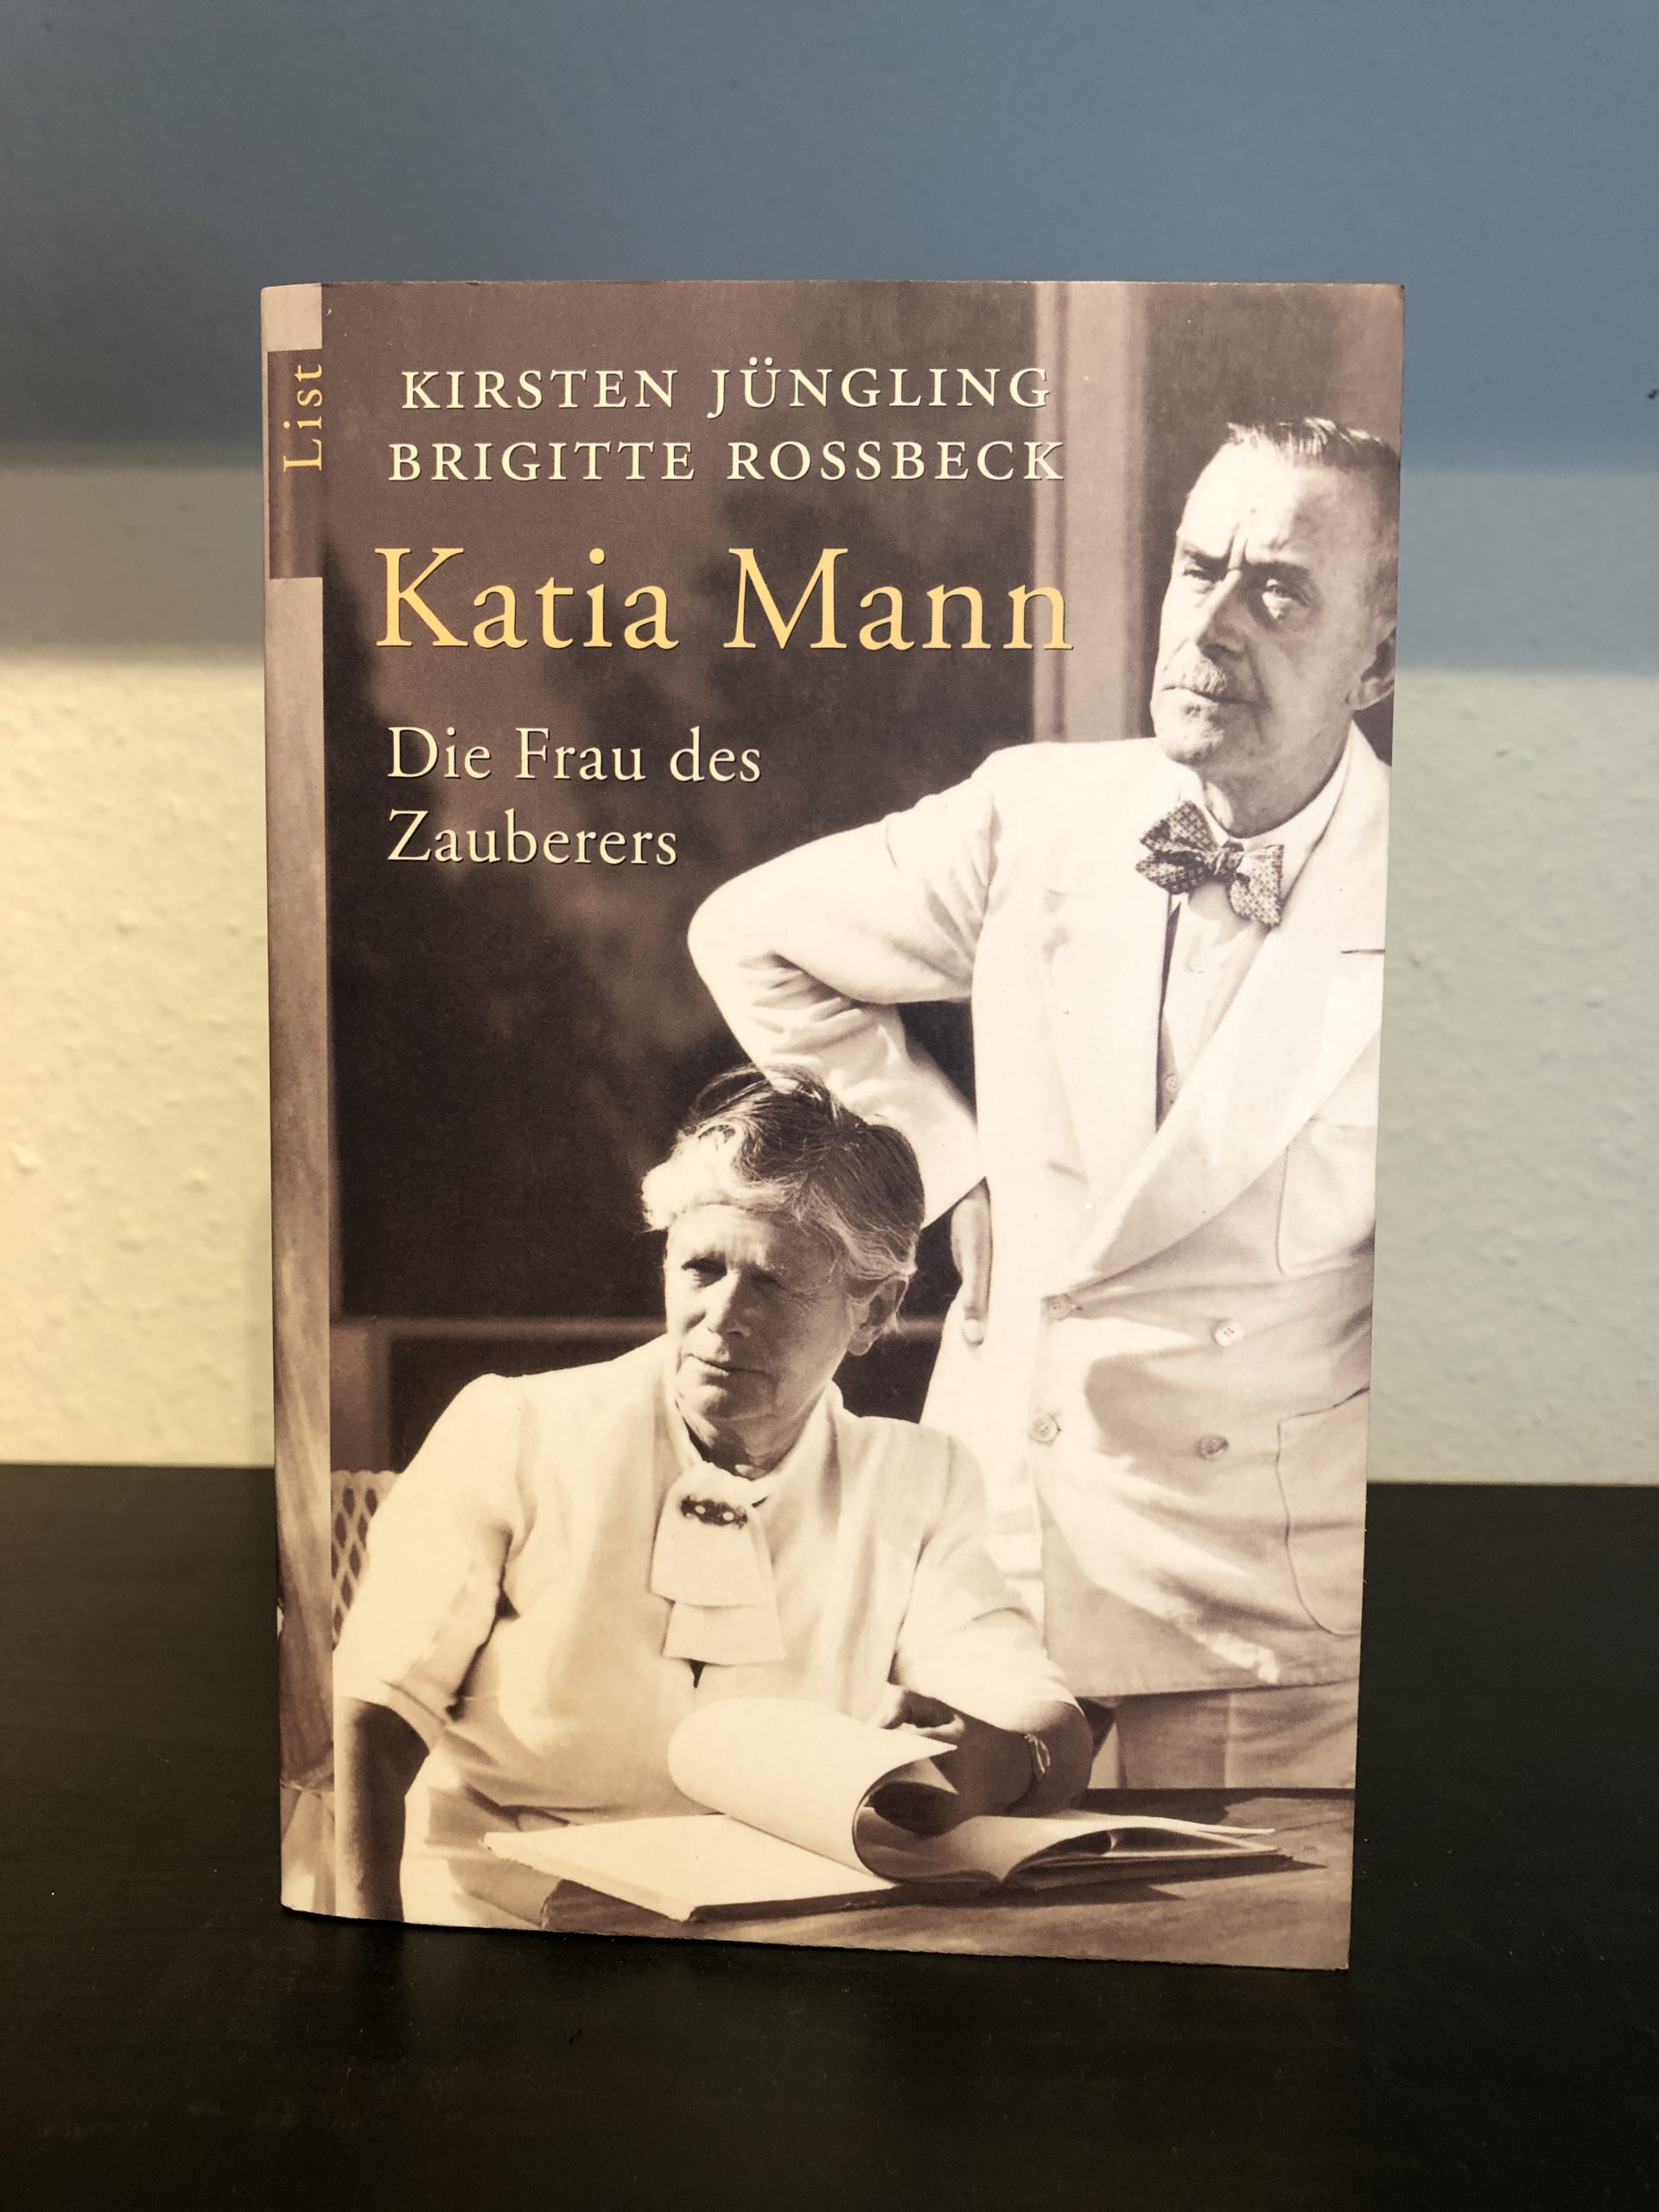 Katia Mann - Die Frau des Zauberers - Kirsten Jüngling, Brigitte Rossbeck main image